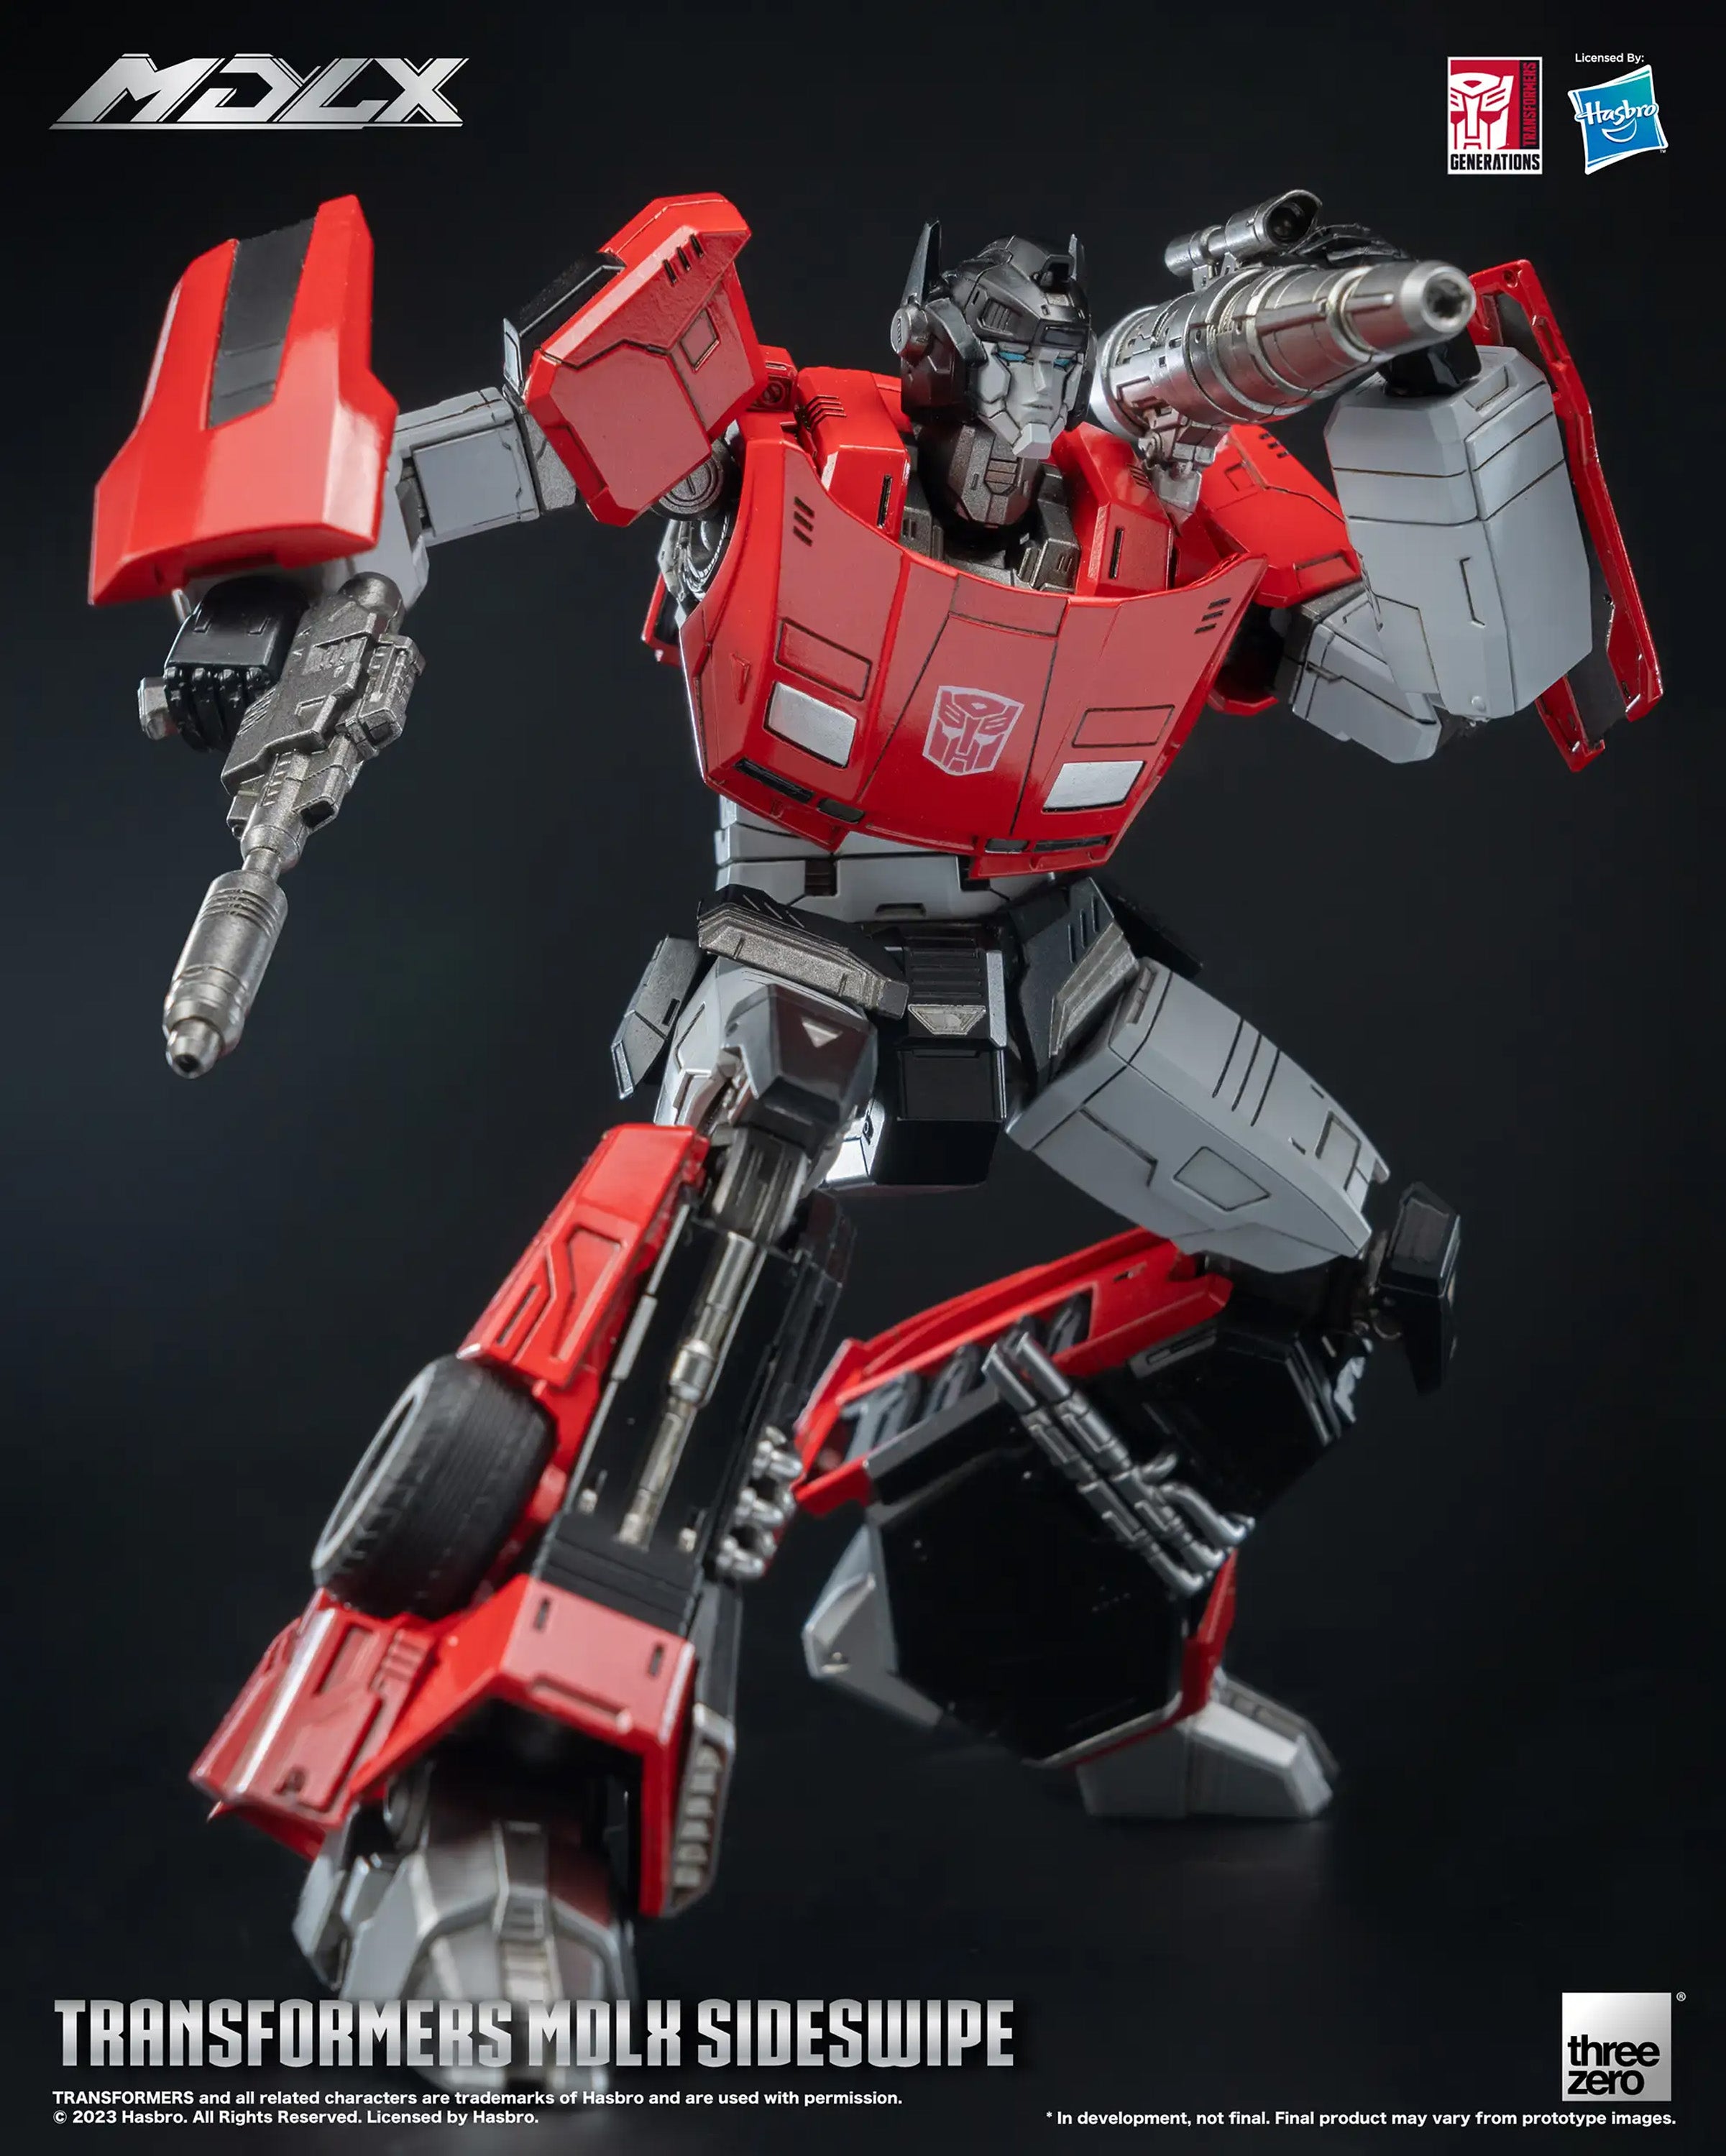 threezero - MDLX - The Transformers - Sideswipe (Kelvin Sau Redesign)